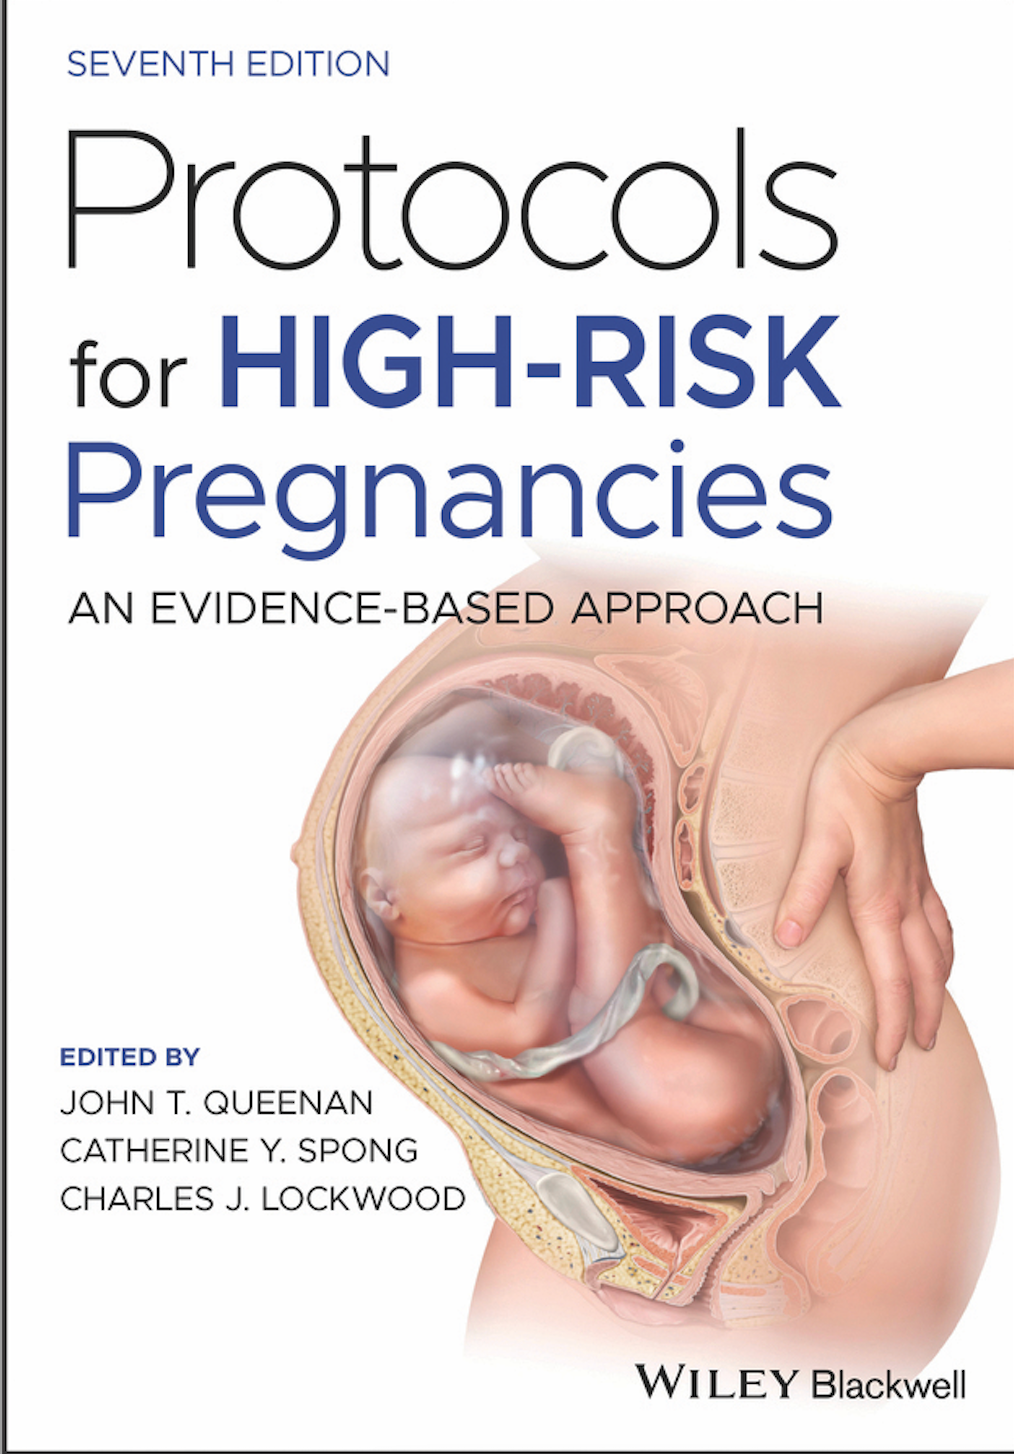 Protocols for High-Risk Pregnancies, 7th Edition: Snapshot: Protocol 18 - Peripartum Cardiomyopathy